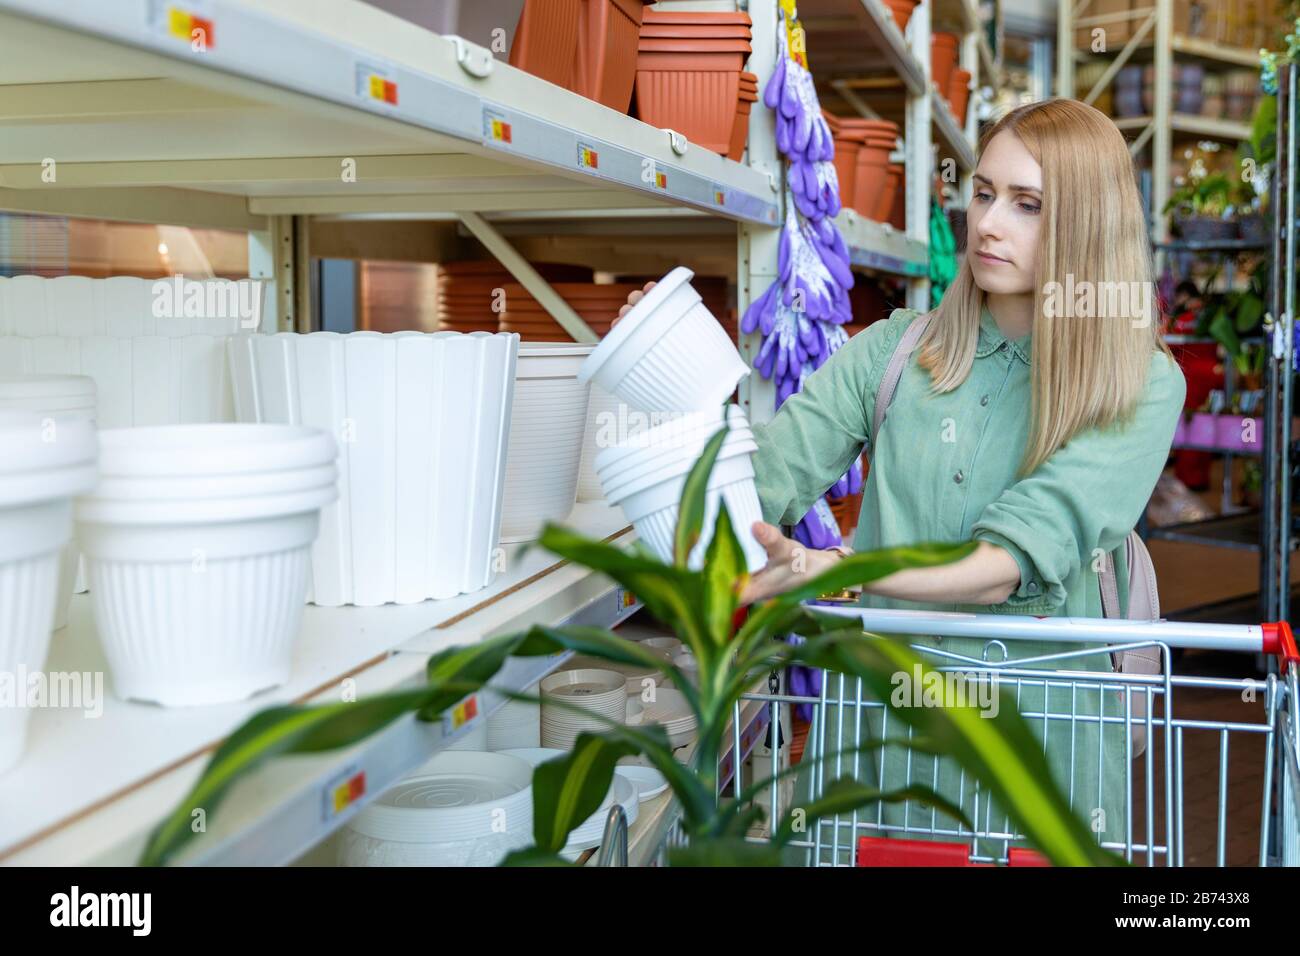 woman choosing flower pots for houseplants at garden center Stock Photo